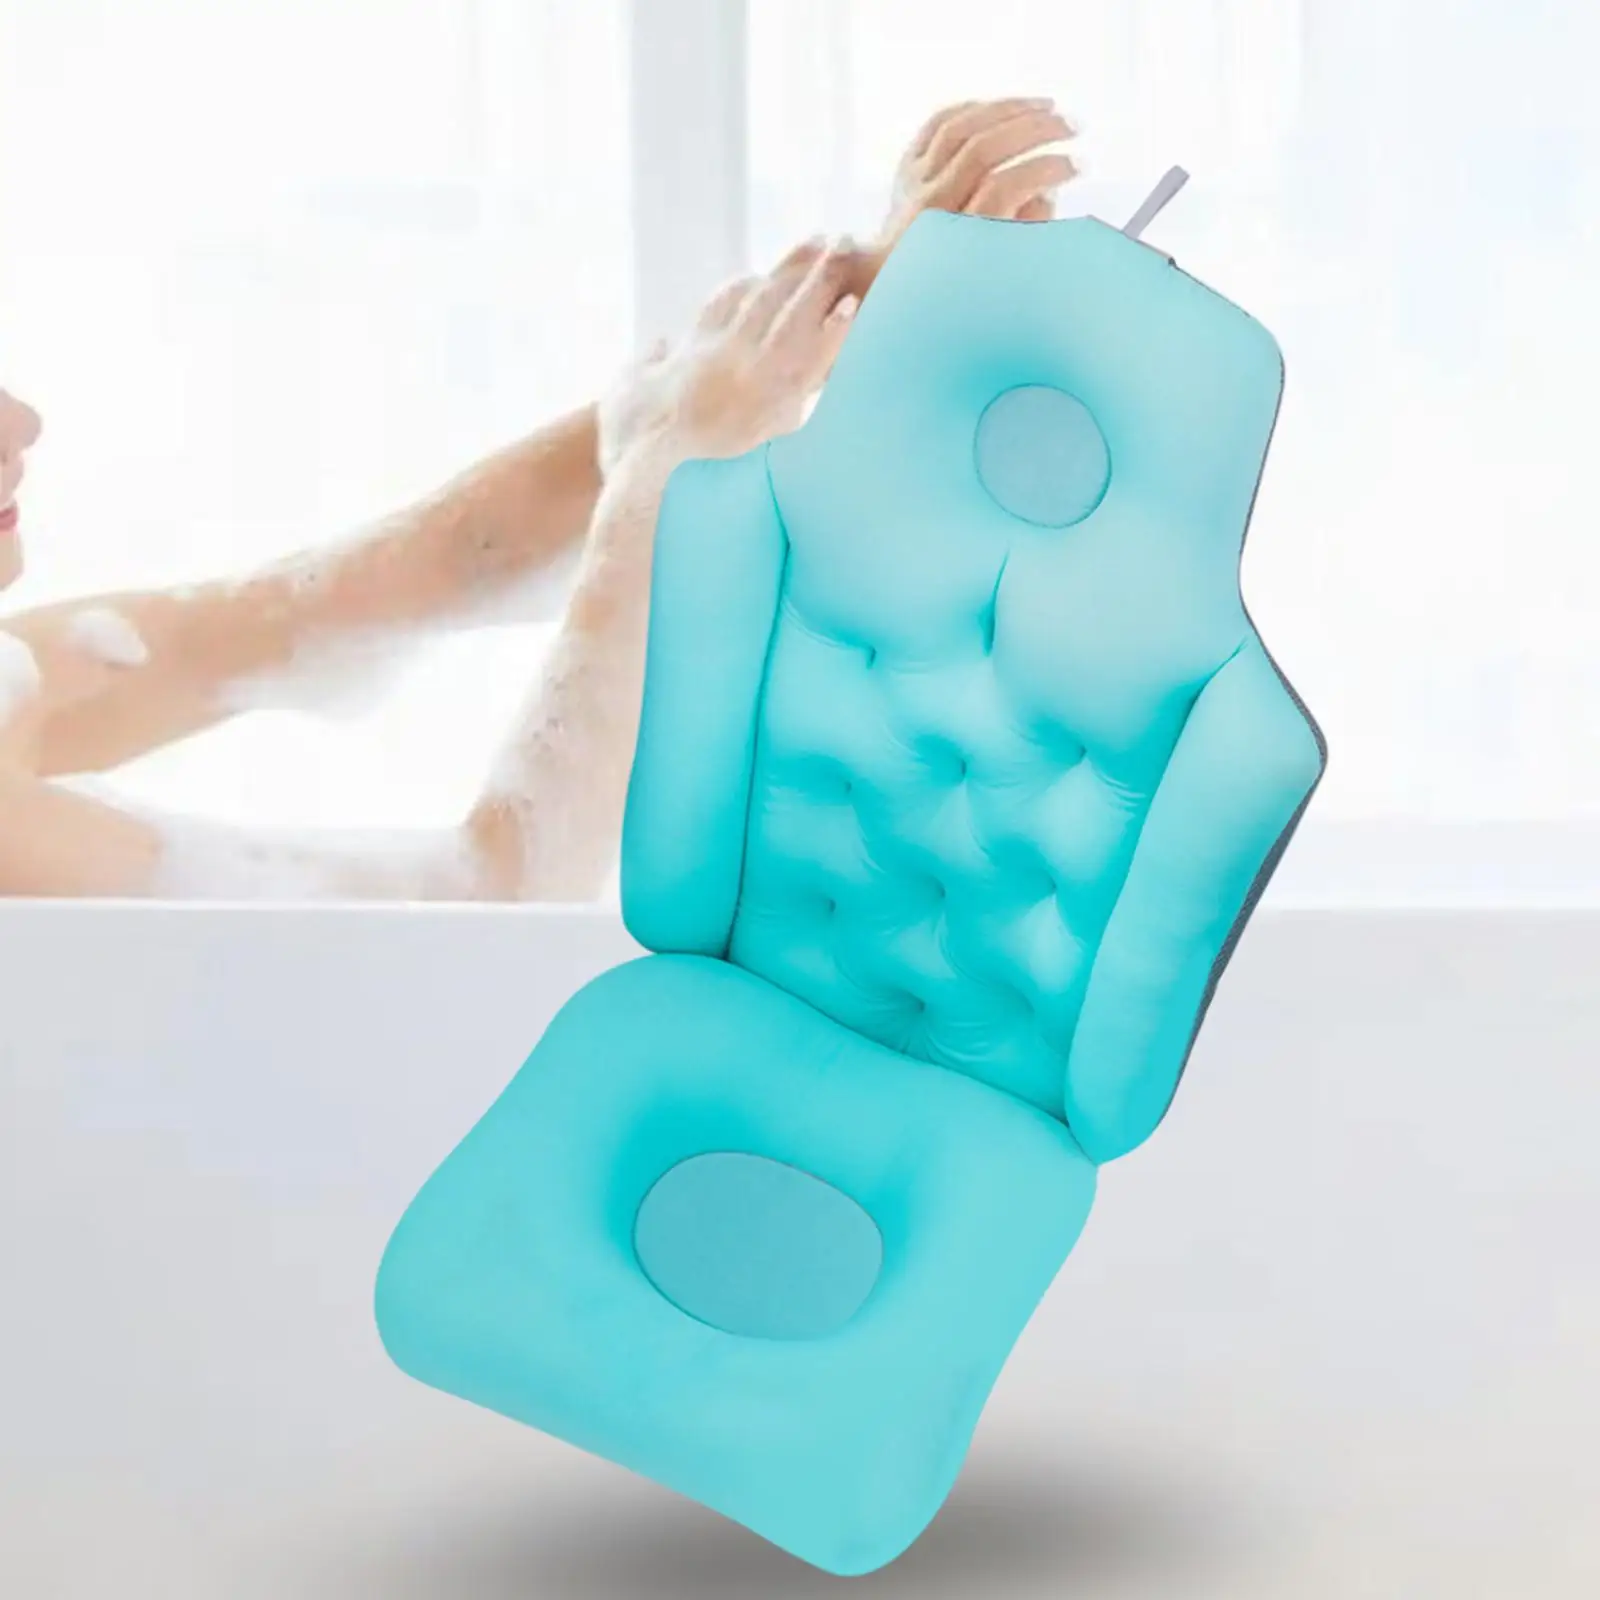 Full Body Bath Pillow Bath Tub Pillows Rest Nonslip Ergonomic Mat for Adults